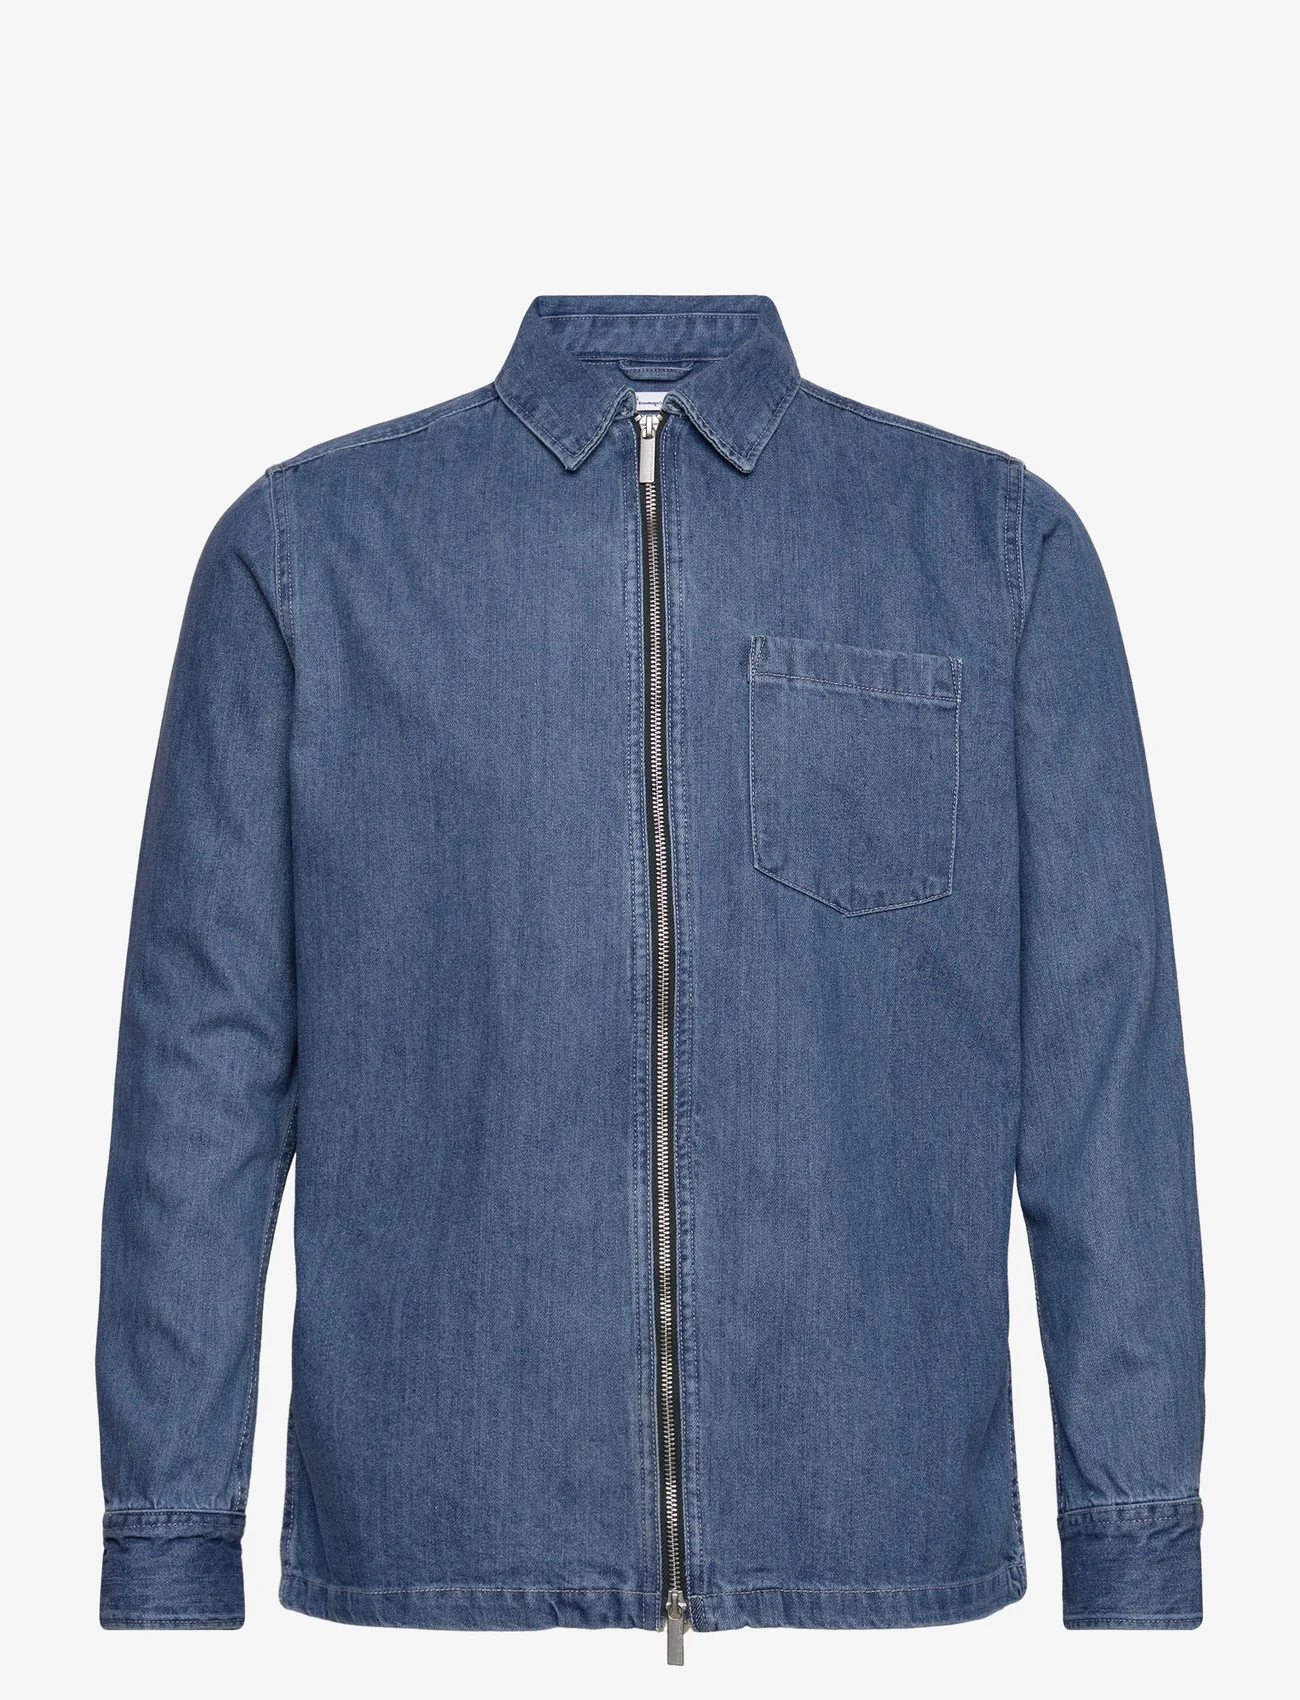 Knowledge Cotton Apparel - Relaxed denim zip shirt - GOTS/Vega - denim shirts - medium wash - 0